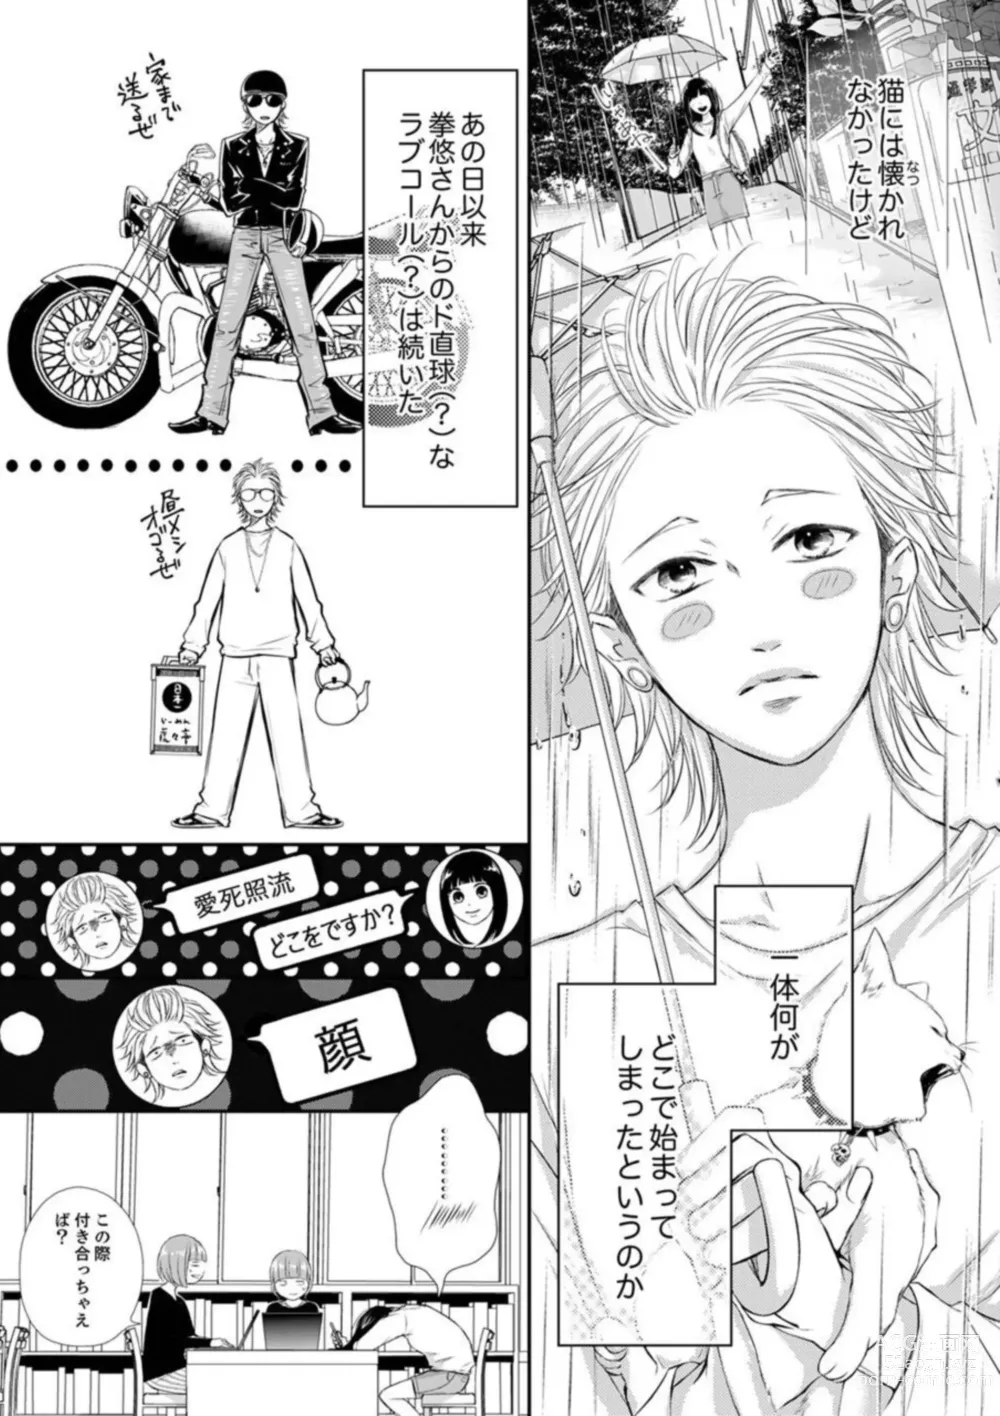 Page 8 of manga Juusei to Aegigoe ~ Uchinuku Tabi ni, Kikasero yo - Gun shot and Panting 1